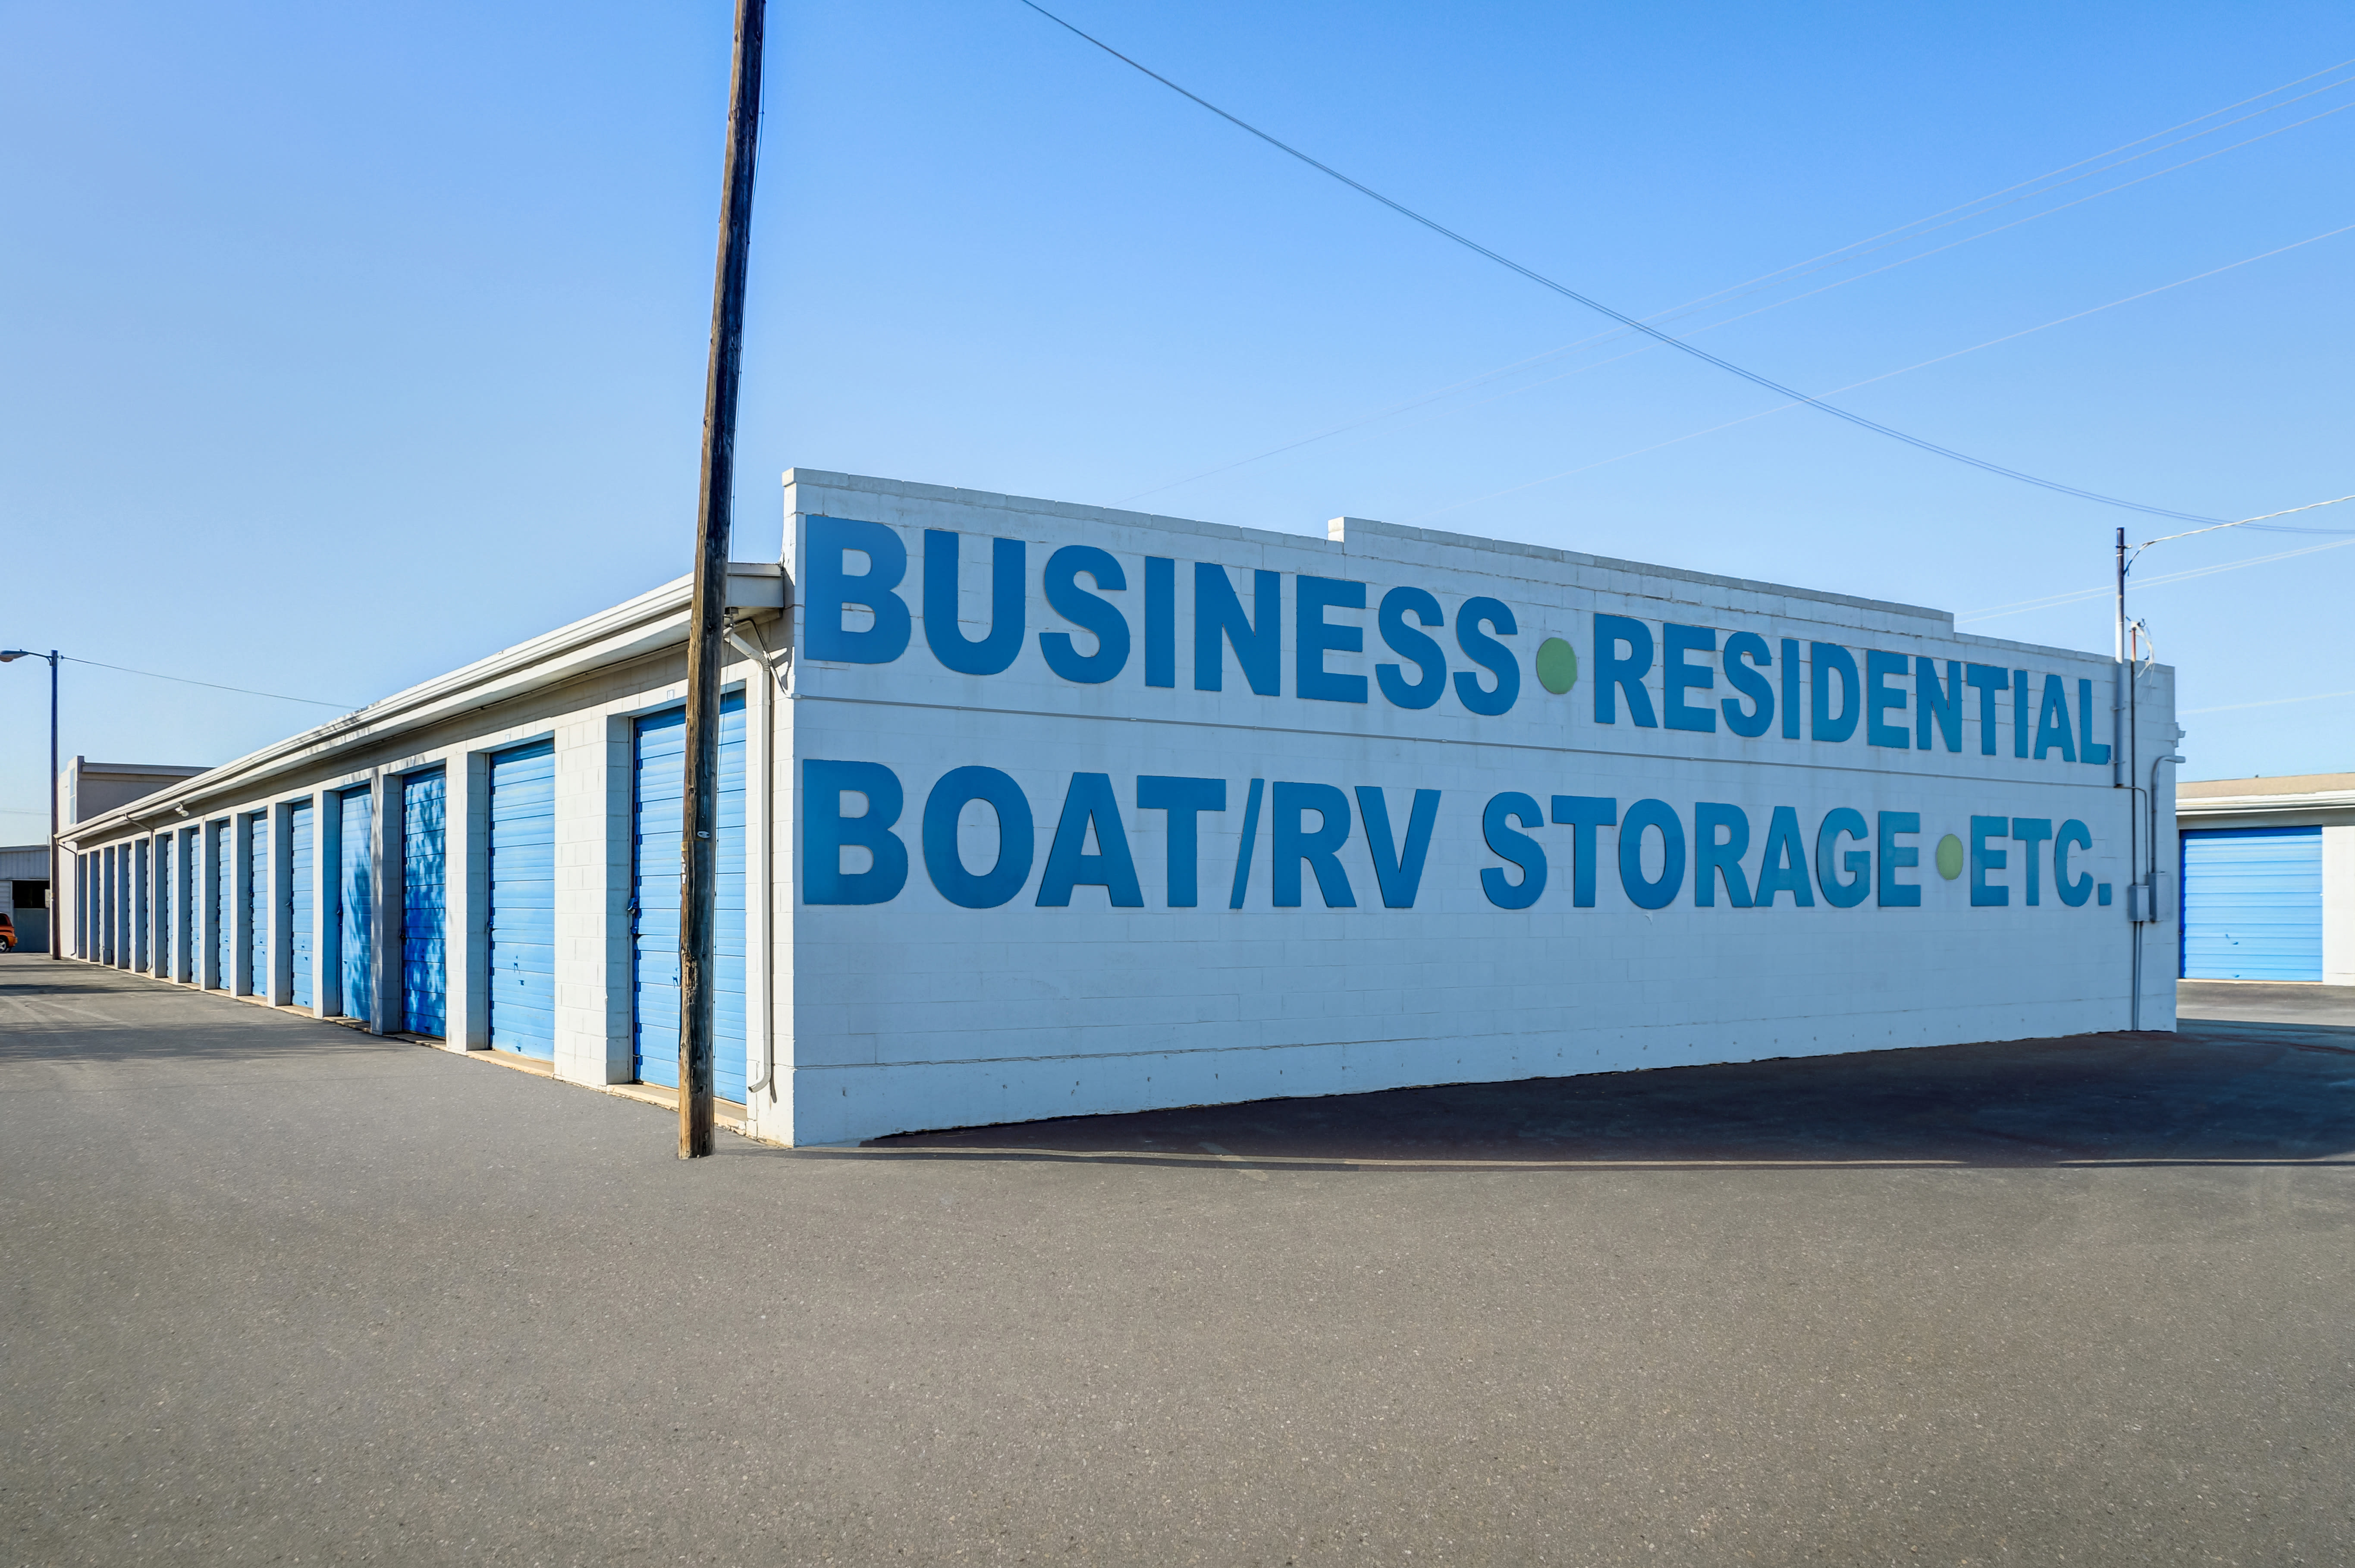 Boat and RV Storage Sign on wall At North Salt Lake Storage